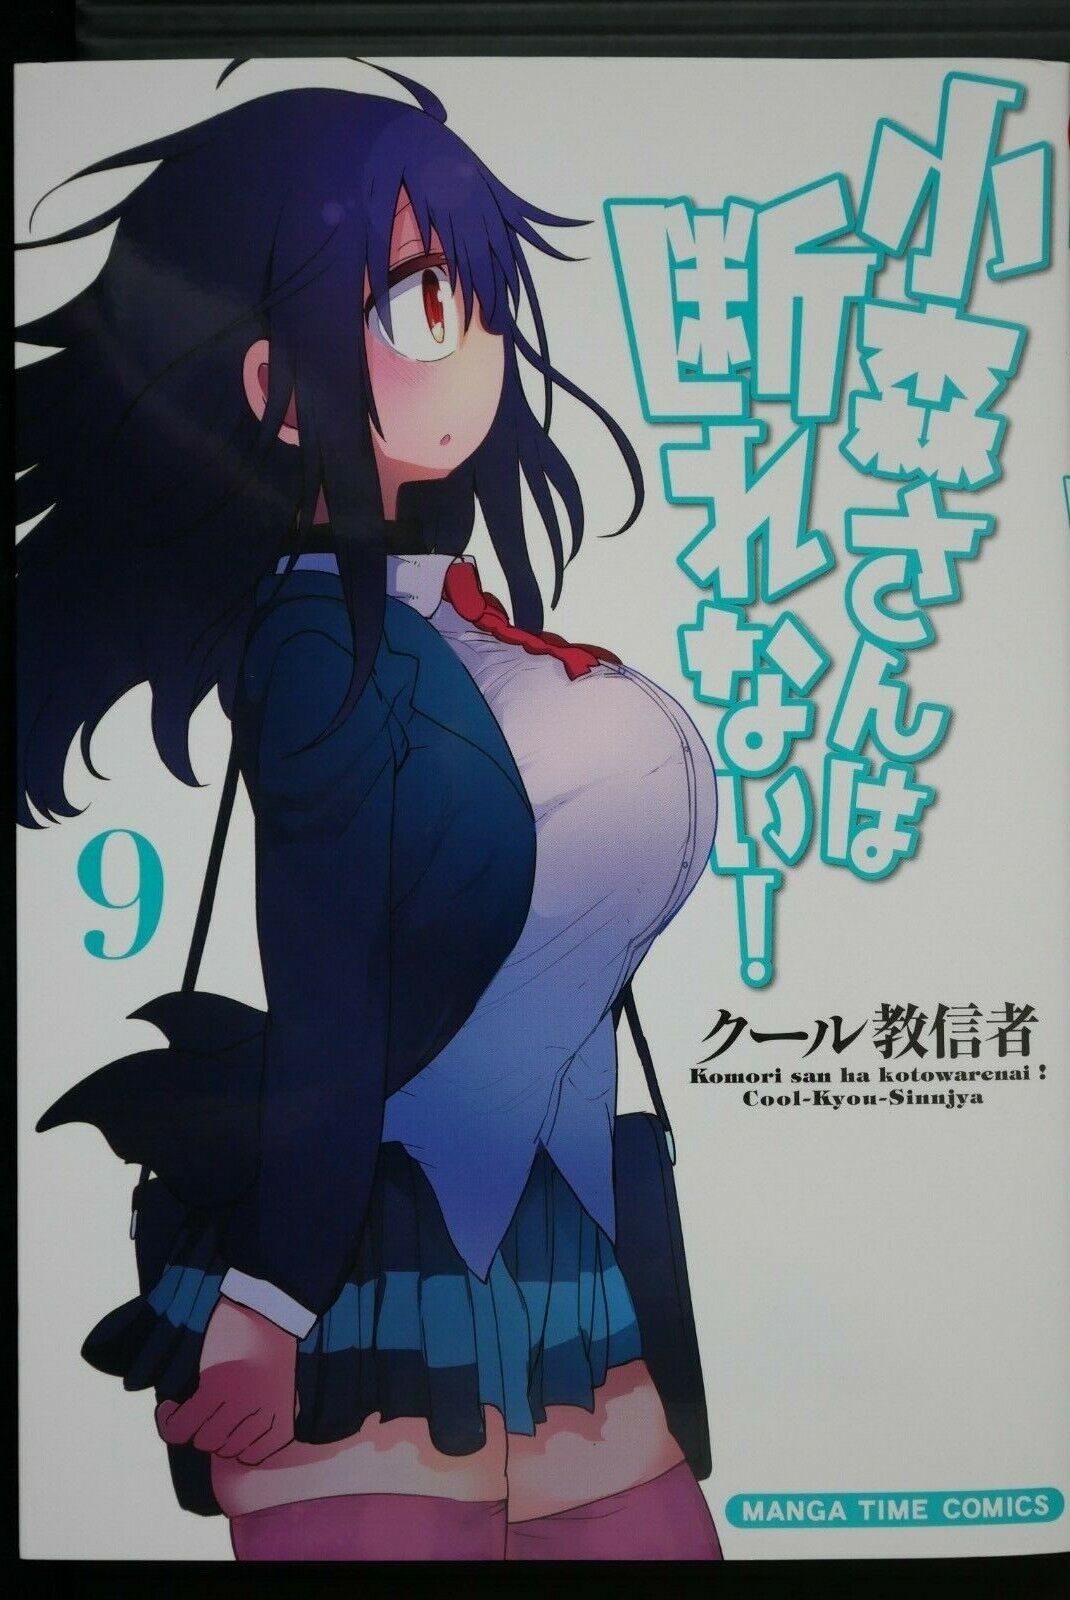 Komori-san Can't Decline Vol.1-9 Set: Manga LOT by Cool-Kyou-Sinnjya from Japan